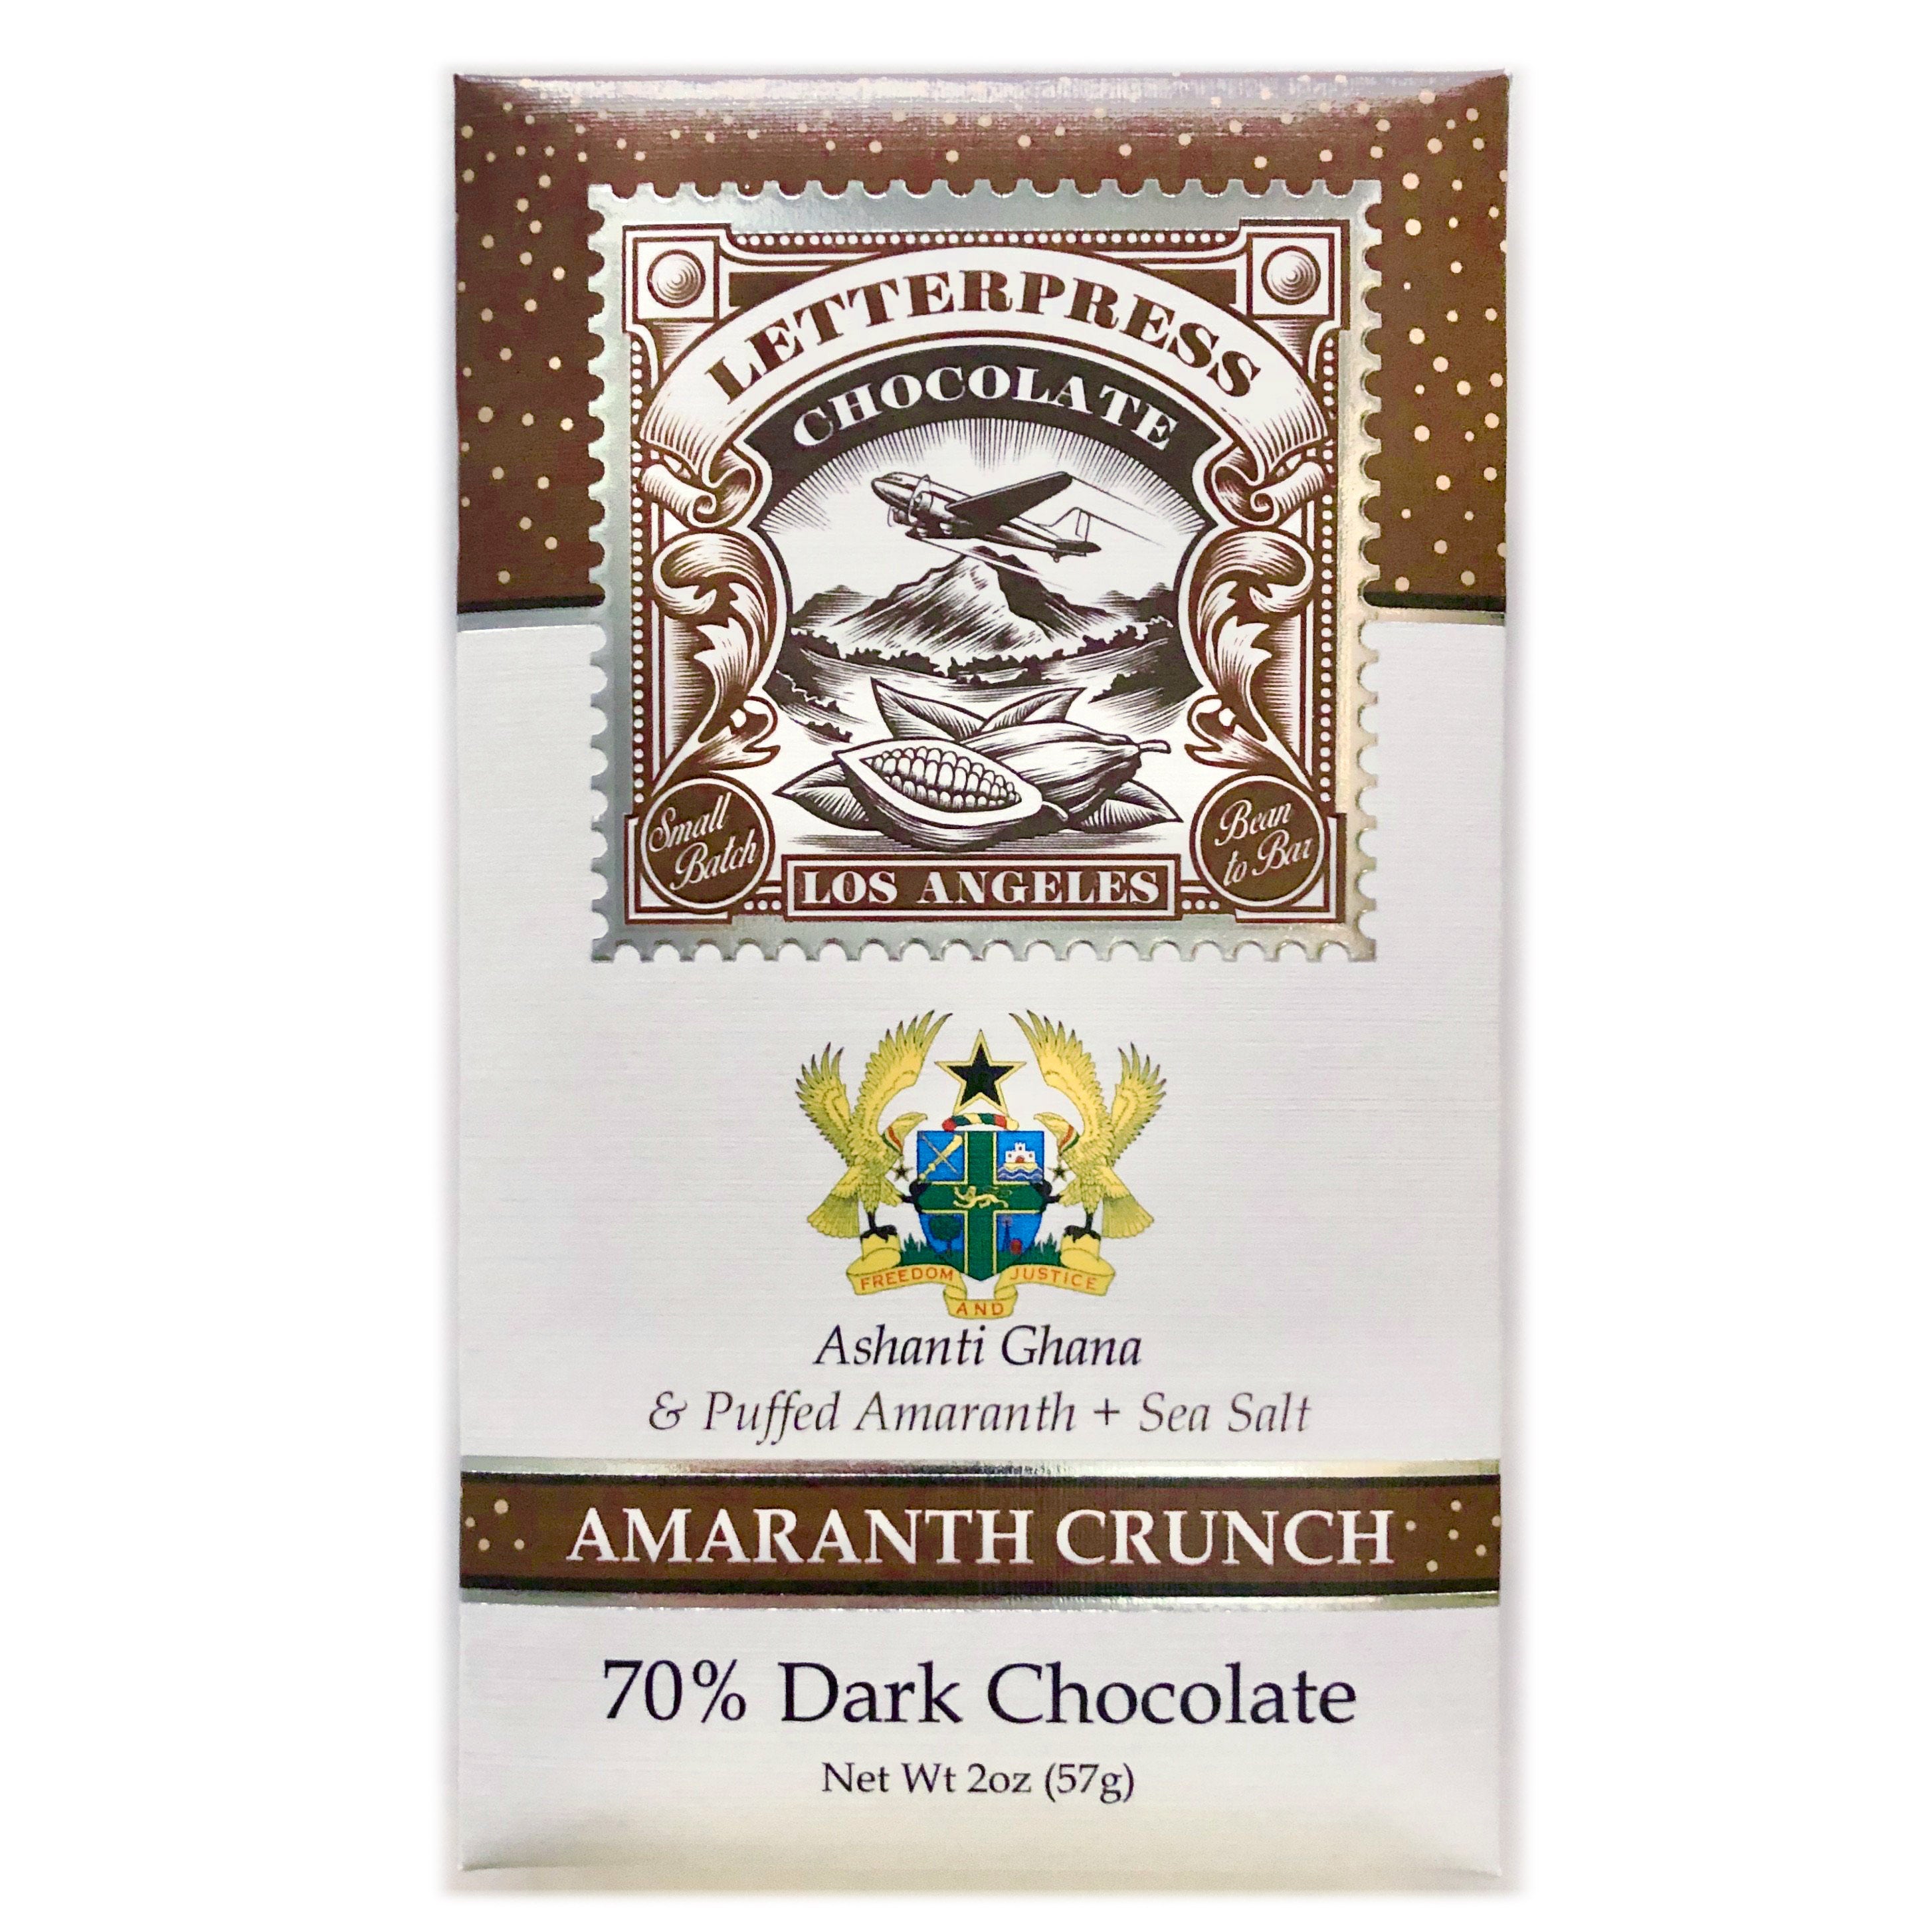 Amaranth Crunch chocolate bar